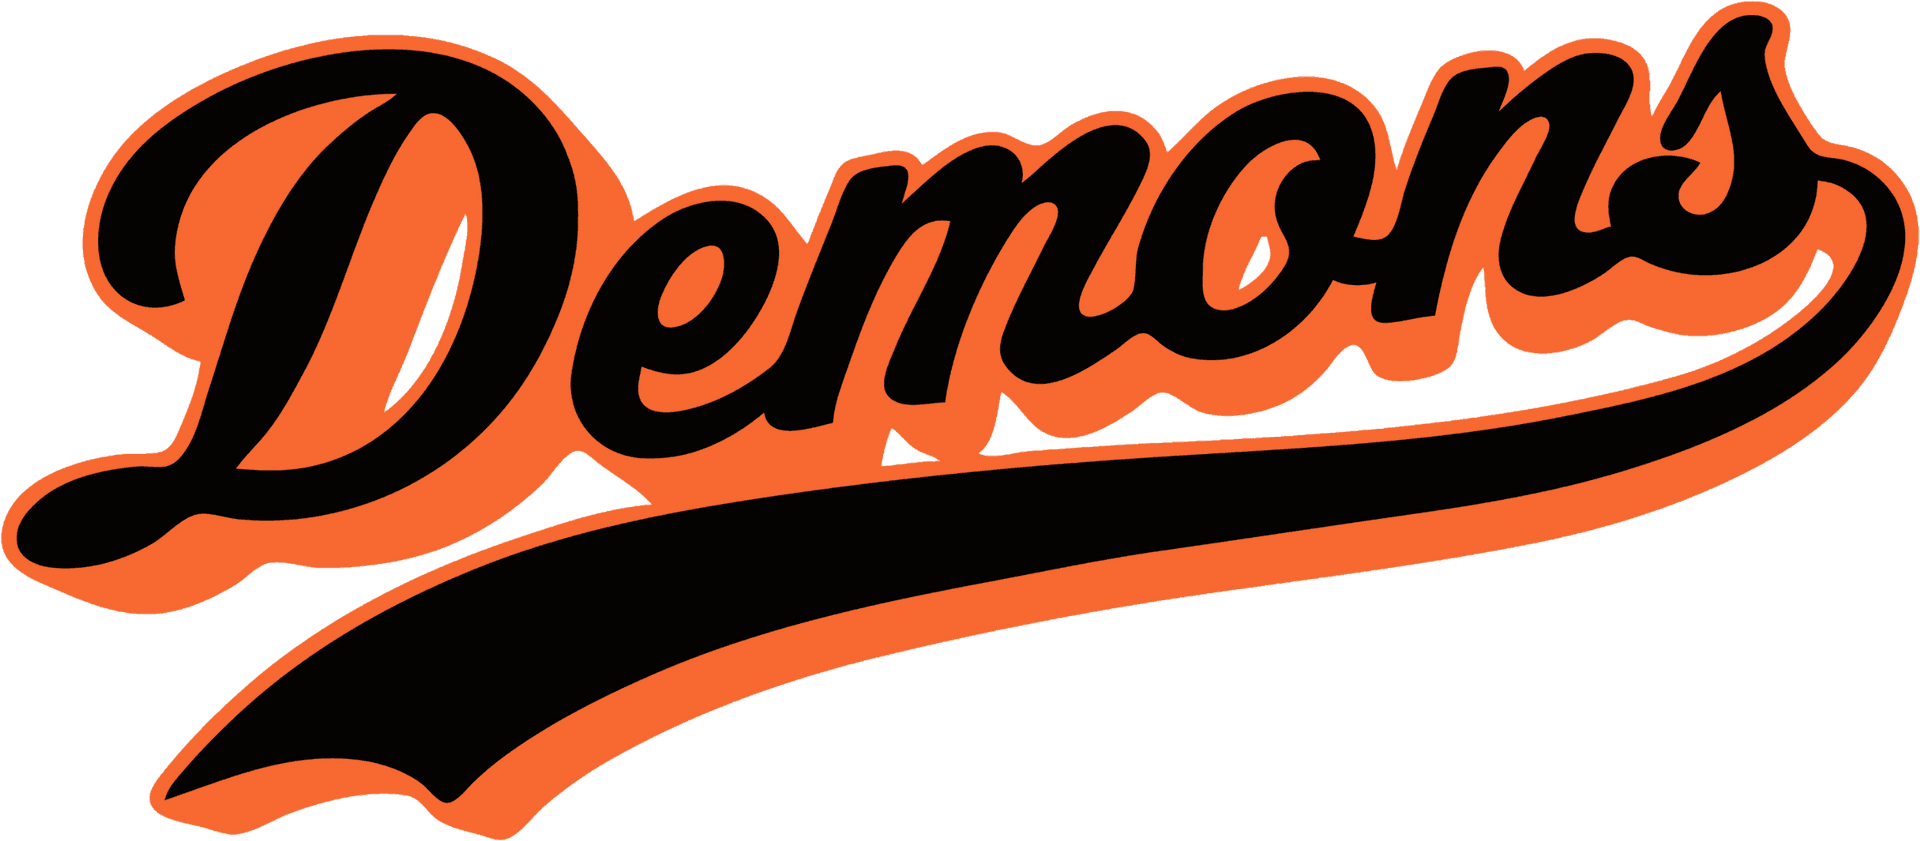 Demons Team Logo PNG image